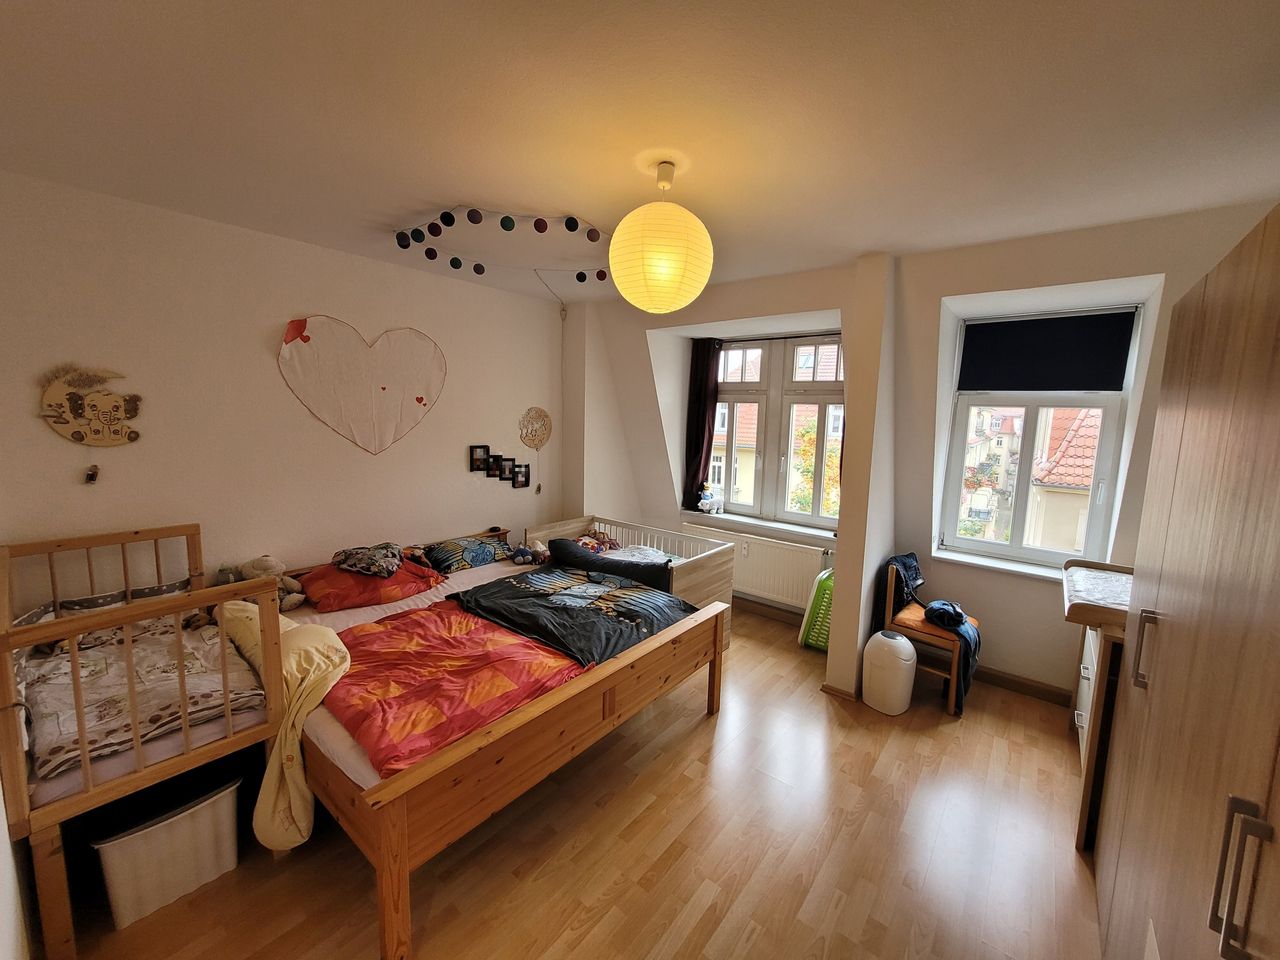 4-5 Room Apartment located in Dresden-Neustadt